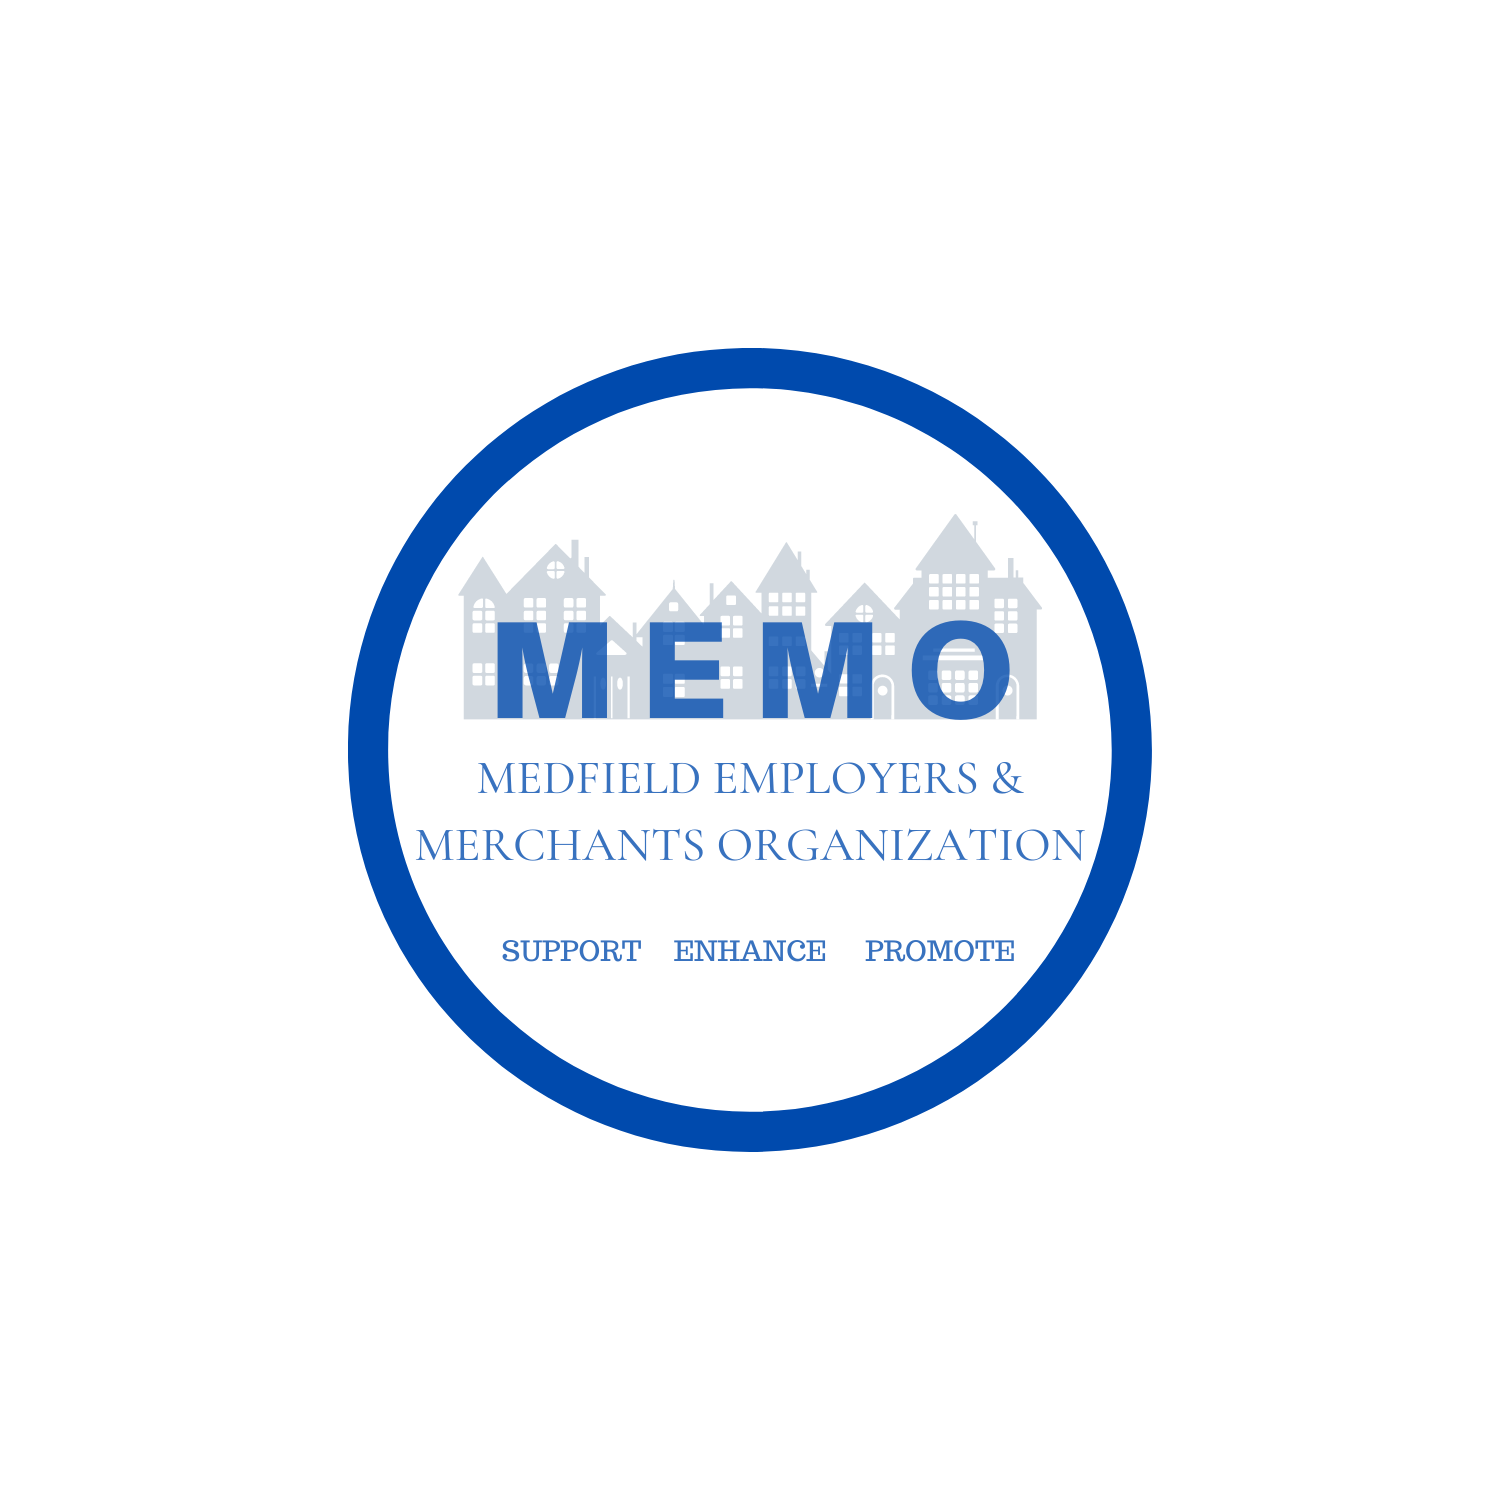 MEMO Medfield Employers and Merchants Organization